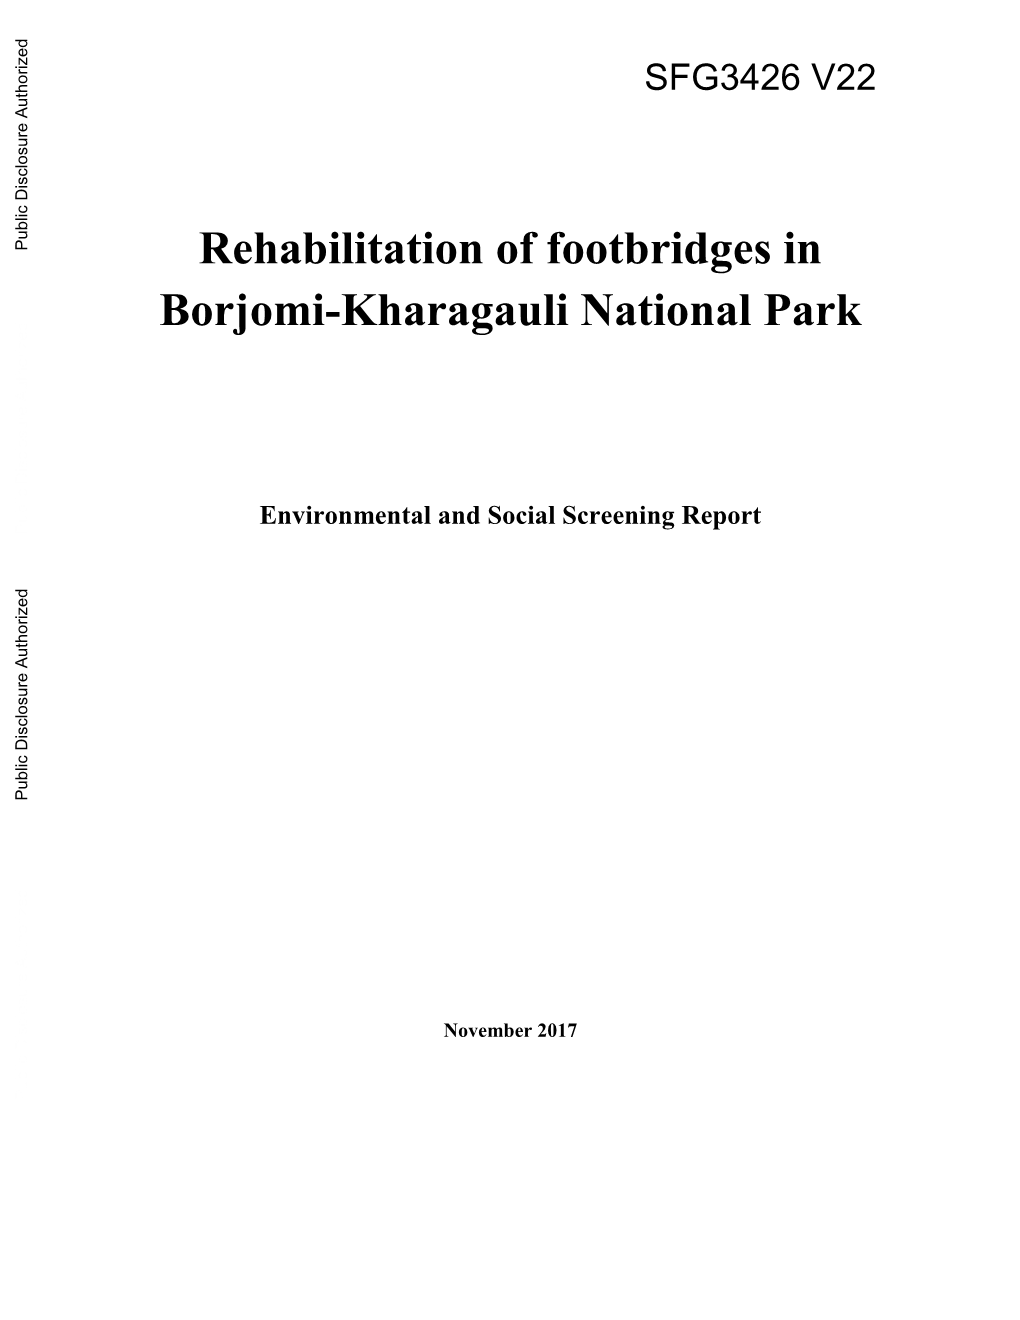 Rehabilitation of Footbridges in Borjomi-Kharagauli National Park